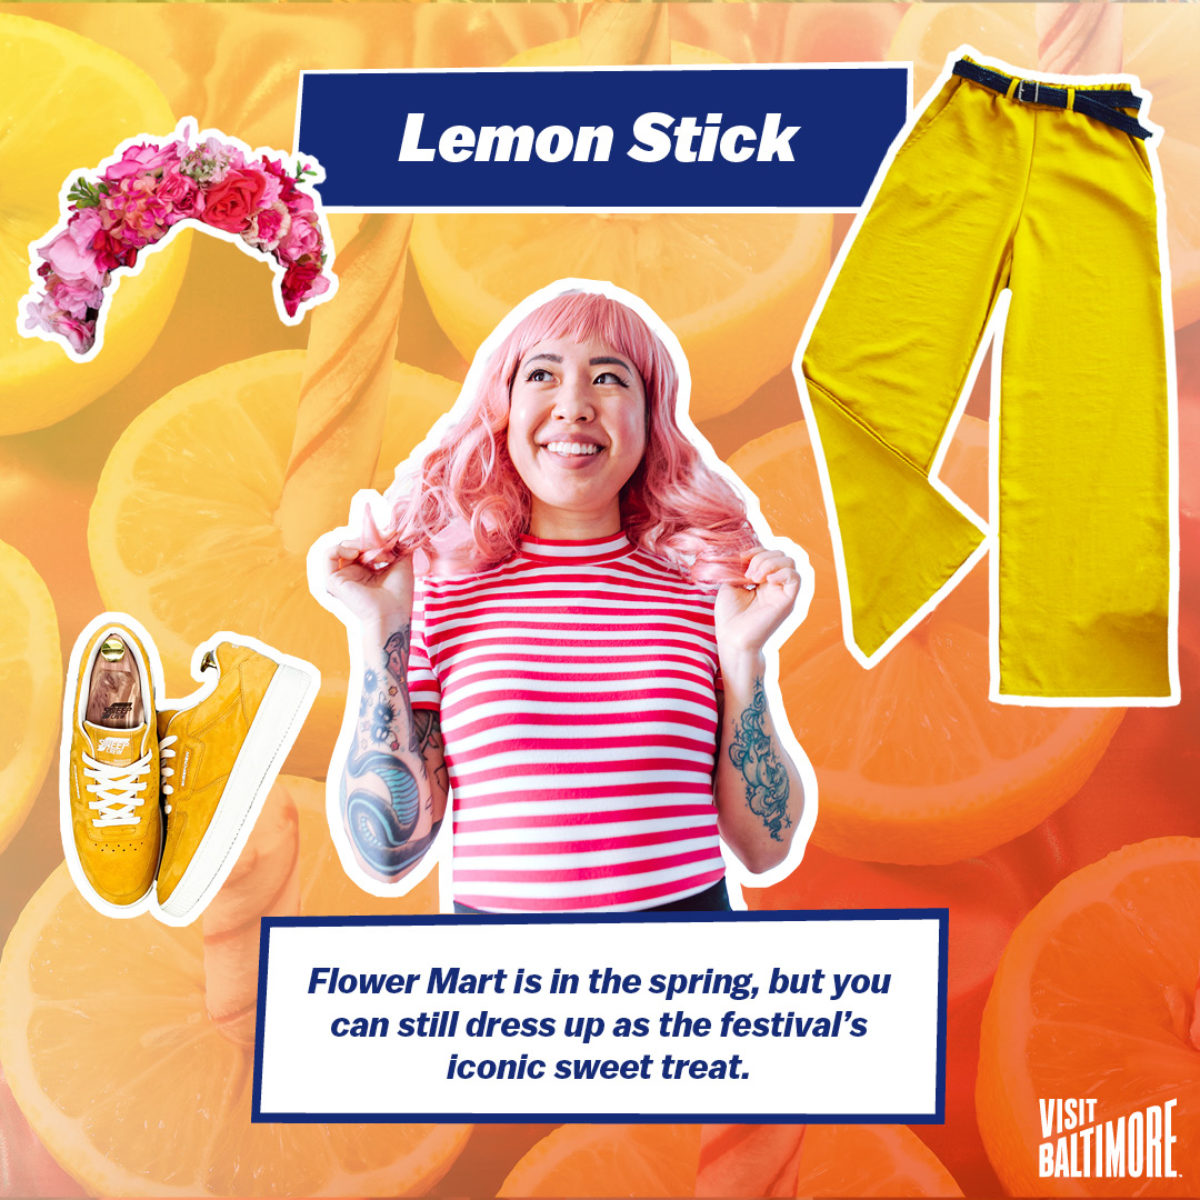 lemon stick costume